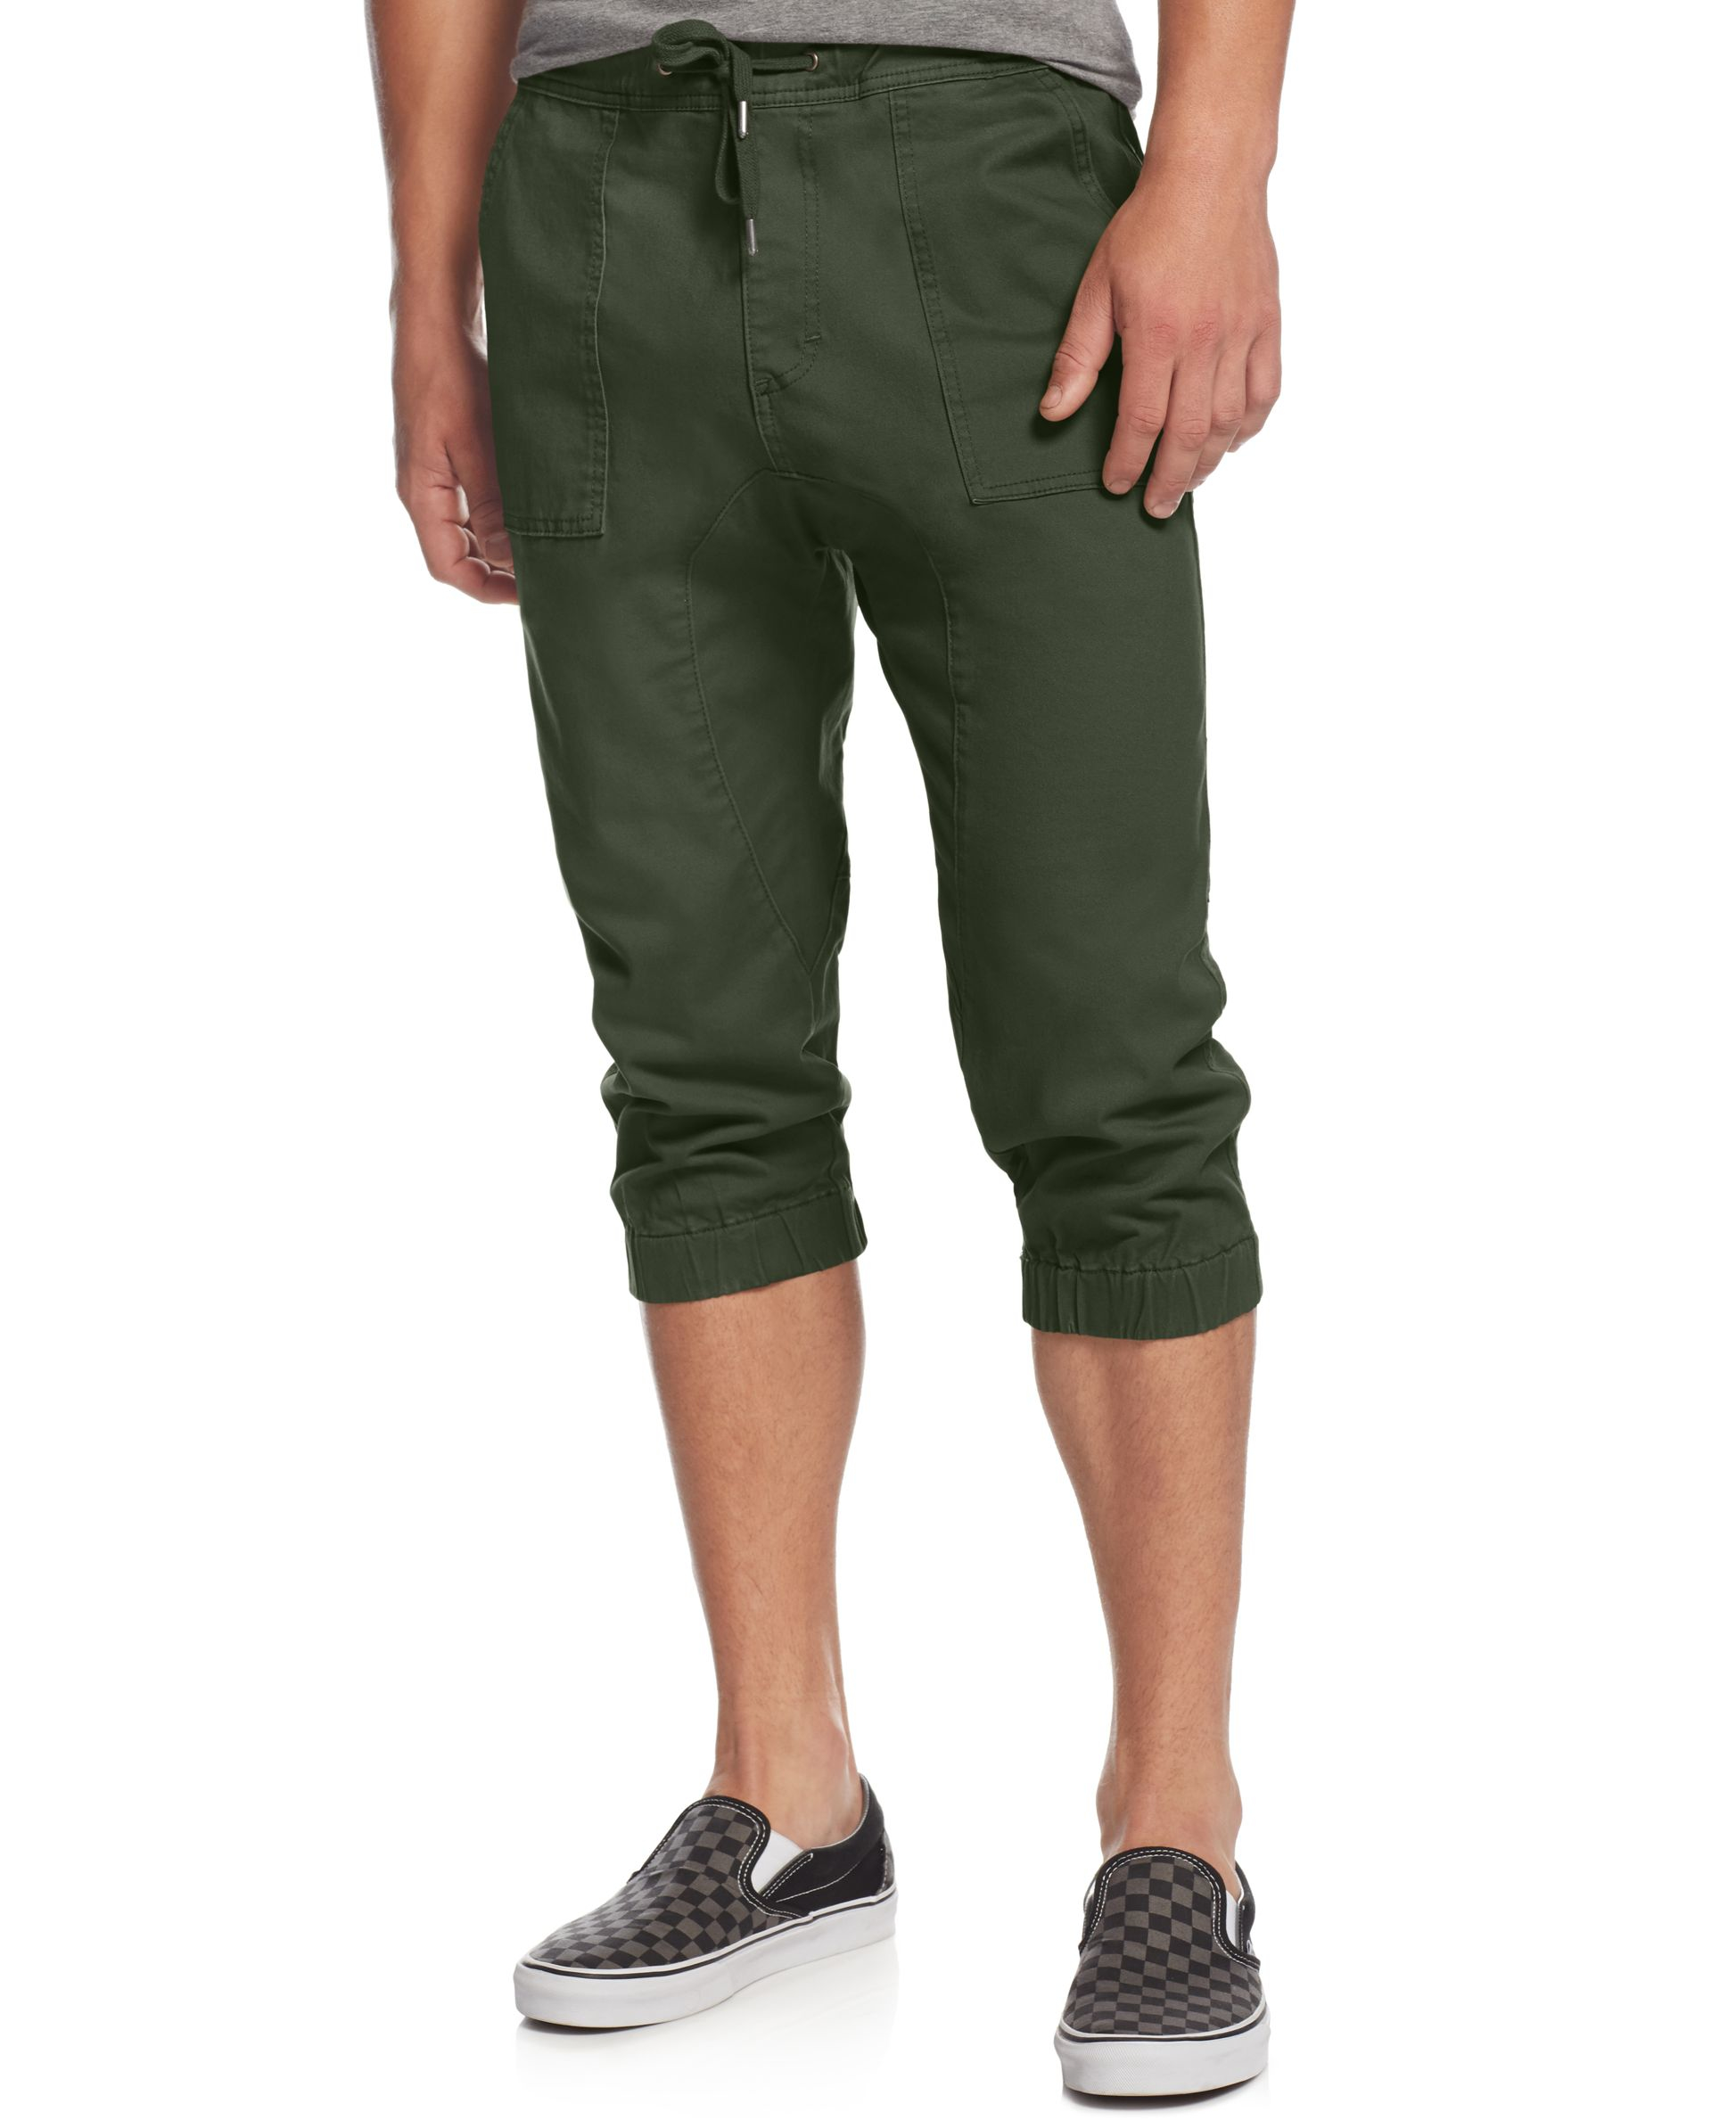 Lyst - American Rag Men's Cropped Jogger Pants in Green for Men